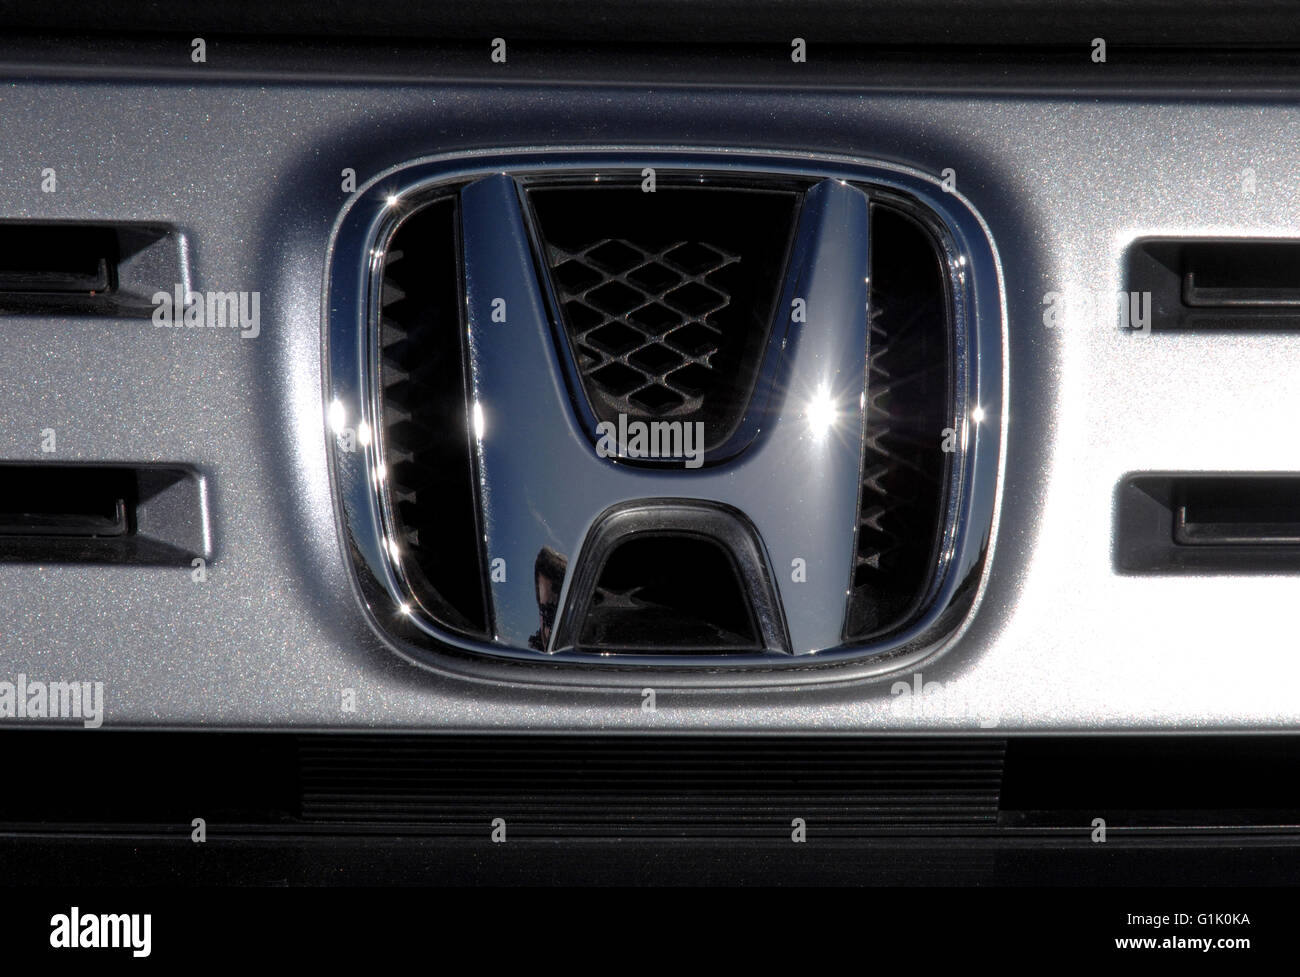 2009 Honda badge on Insight hybrid family hatchback car Stock Photo